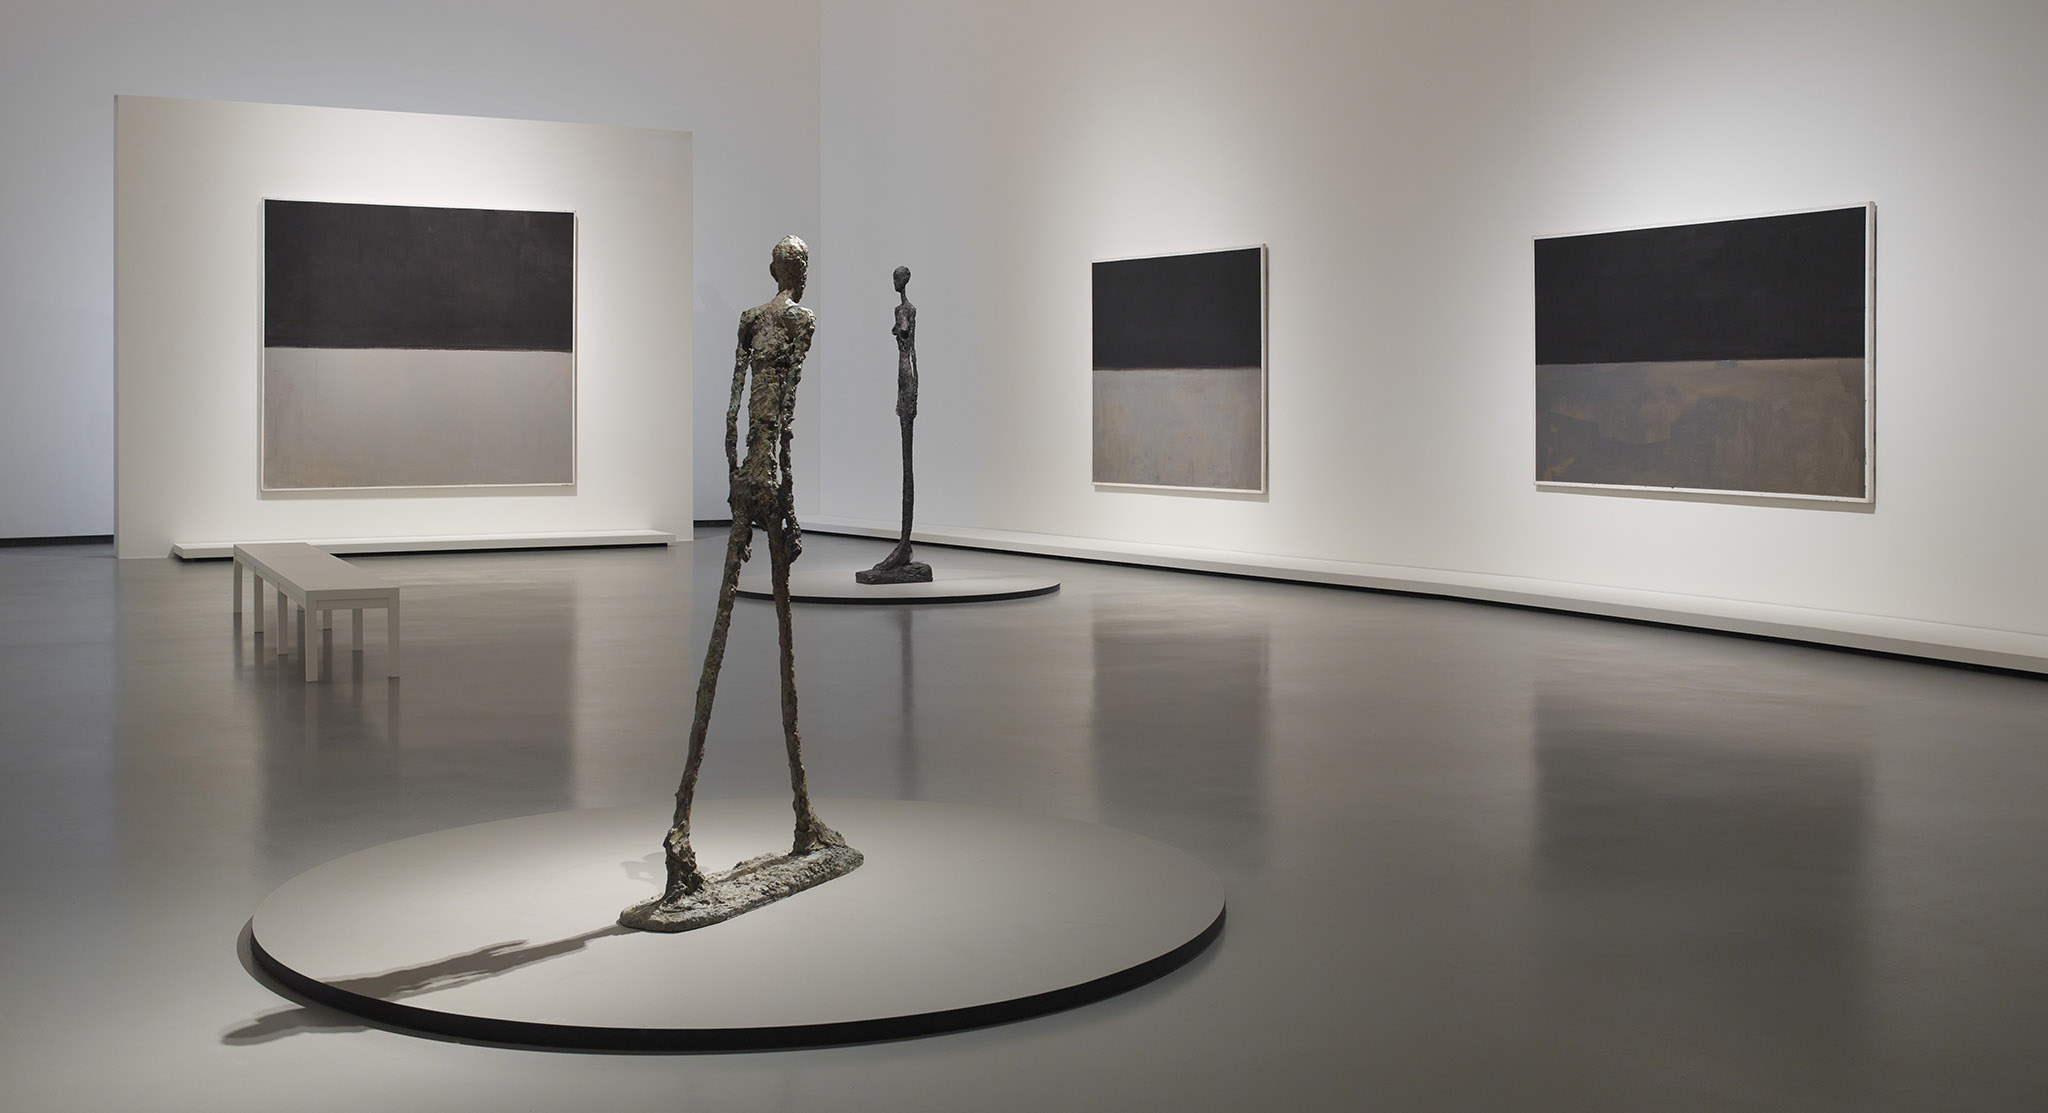 Fondation Louis Vuitton hosts major Mark Rothko retrospective from